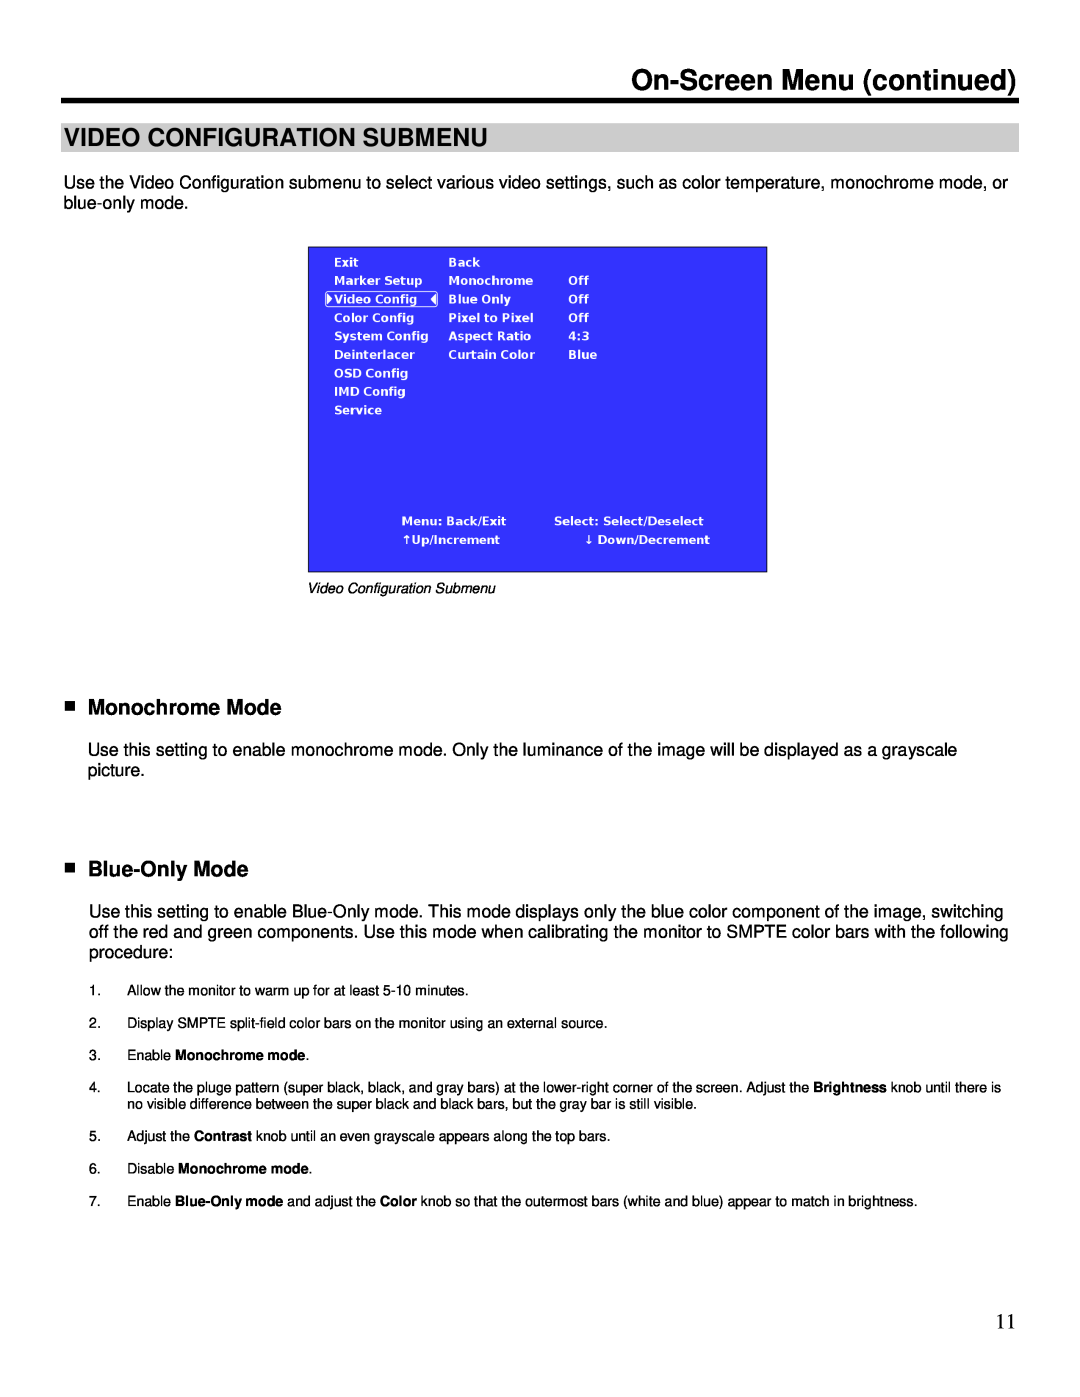 Marshall electronic V-R1041-IMD-TE4U operating instructions Video Configuration Submenu, Monochrome Mode, Blue-Only Mode 